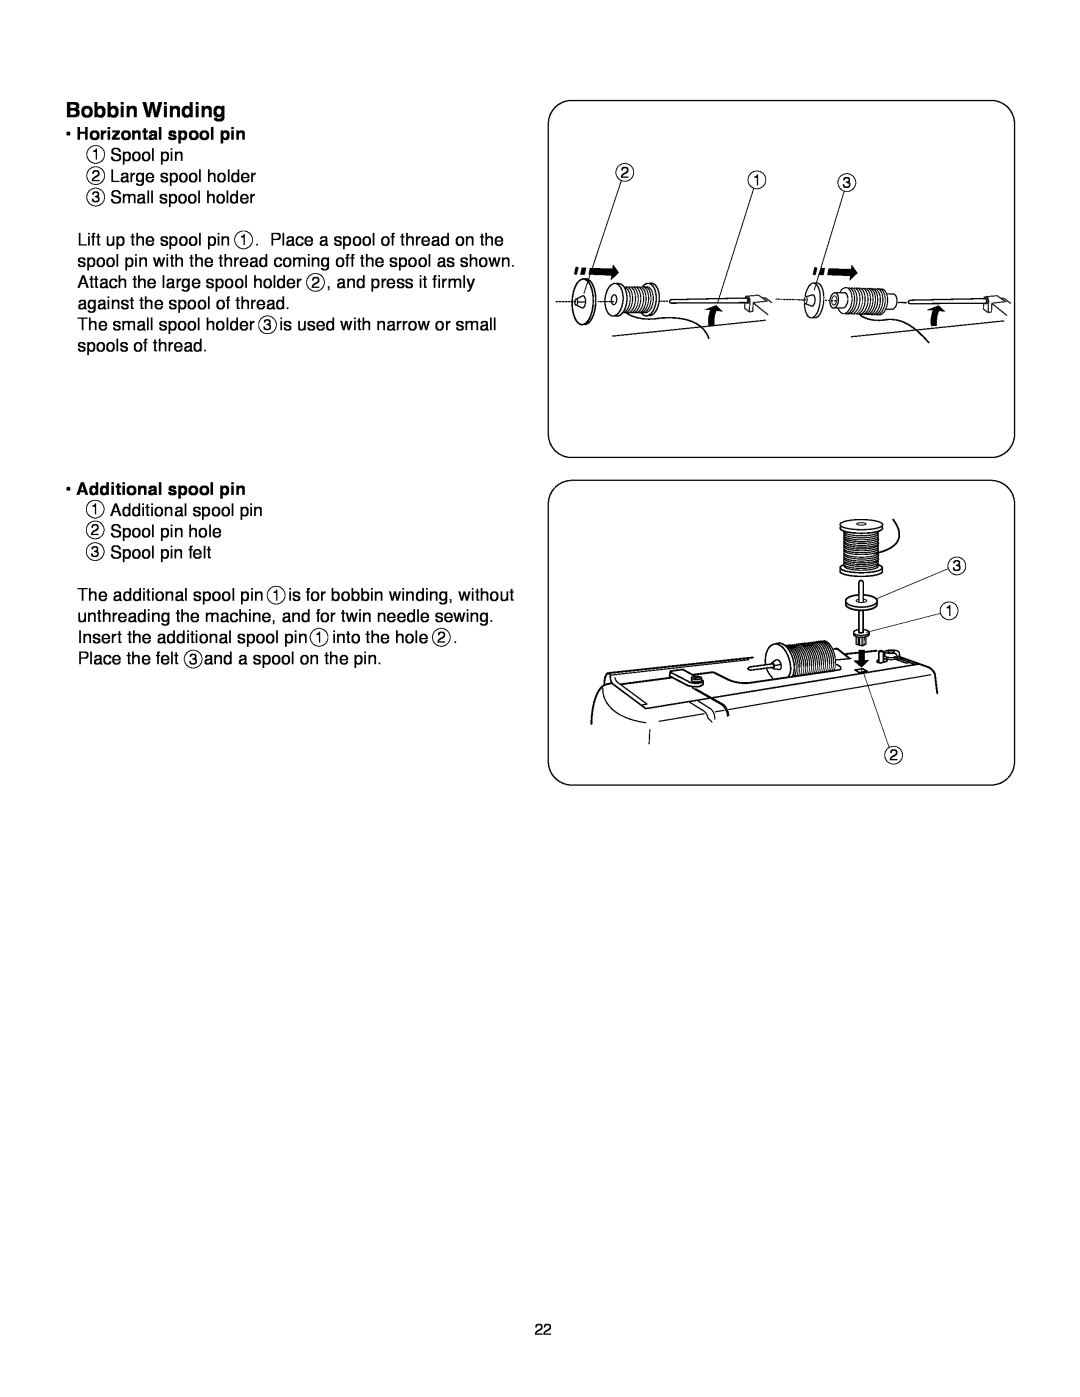 Janome MS-5027 instruction manual Bobbin Winding, Horizontal spool pin 1 Spool pin 